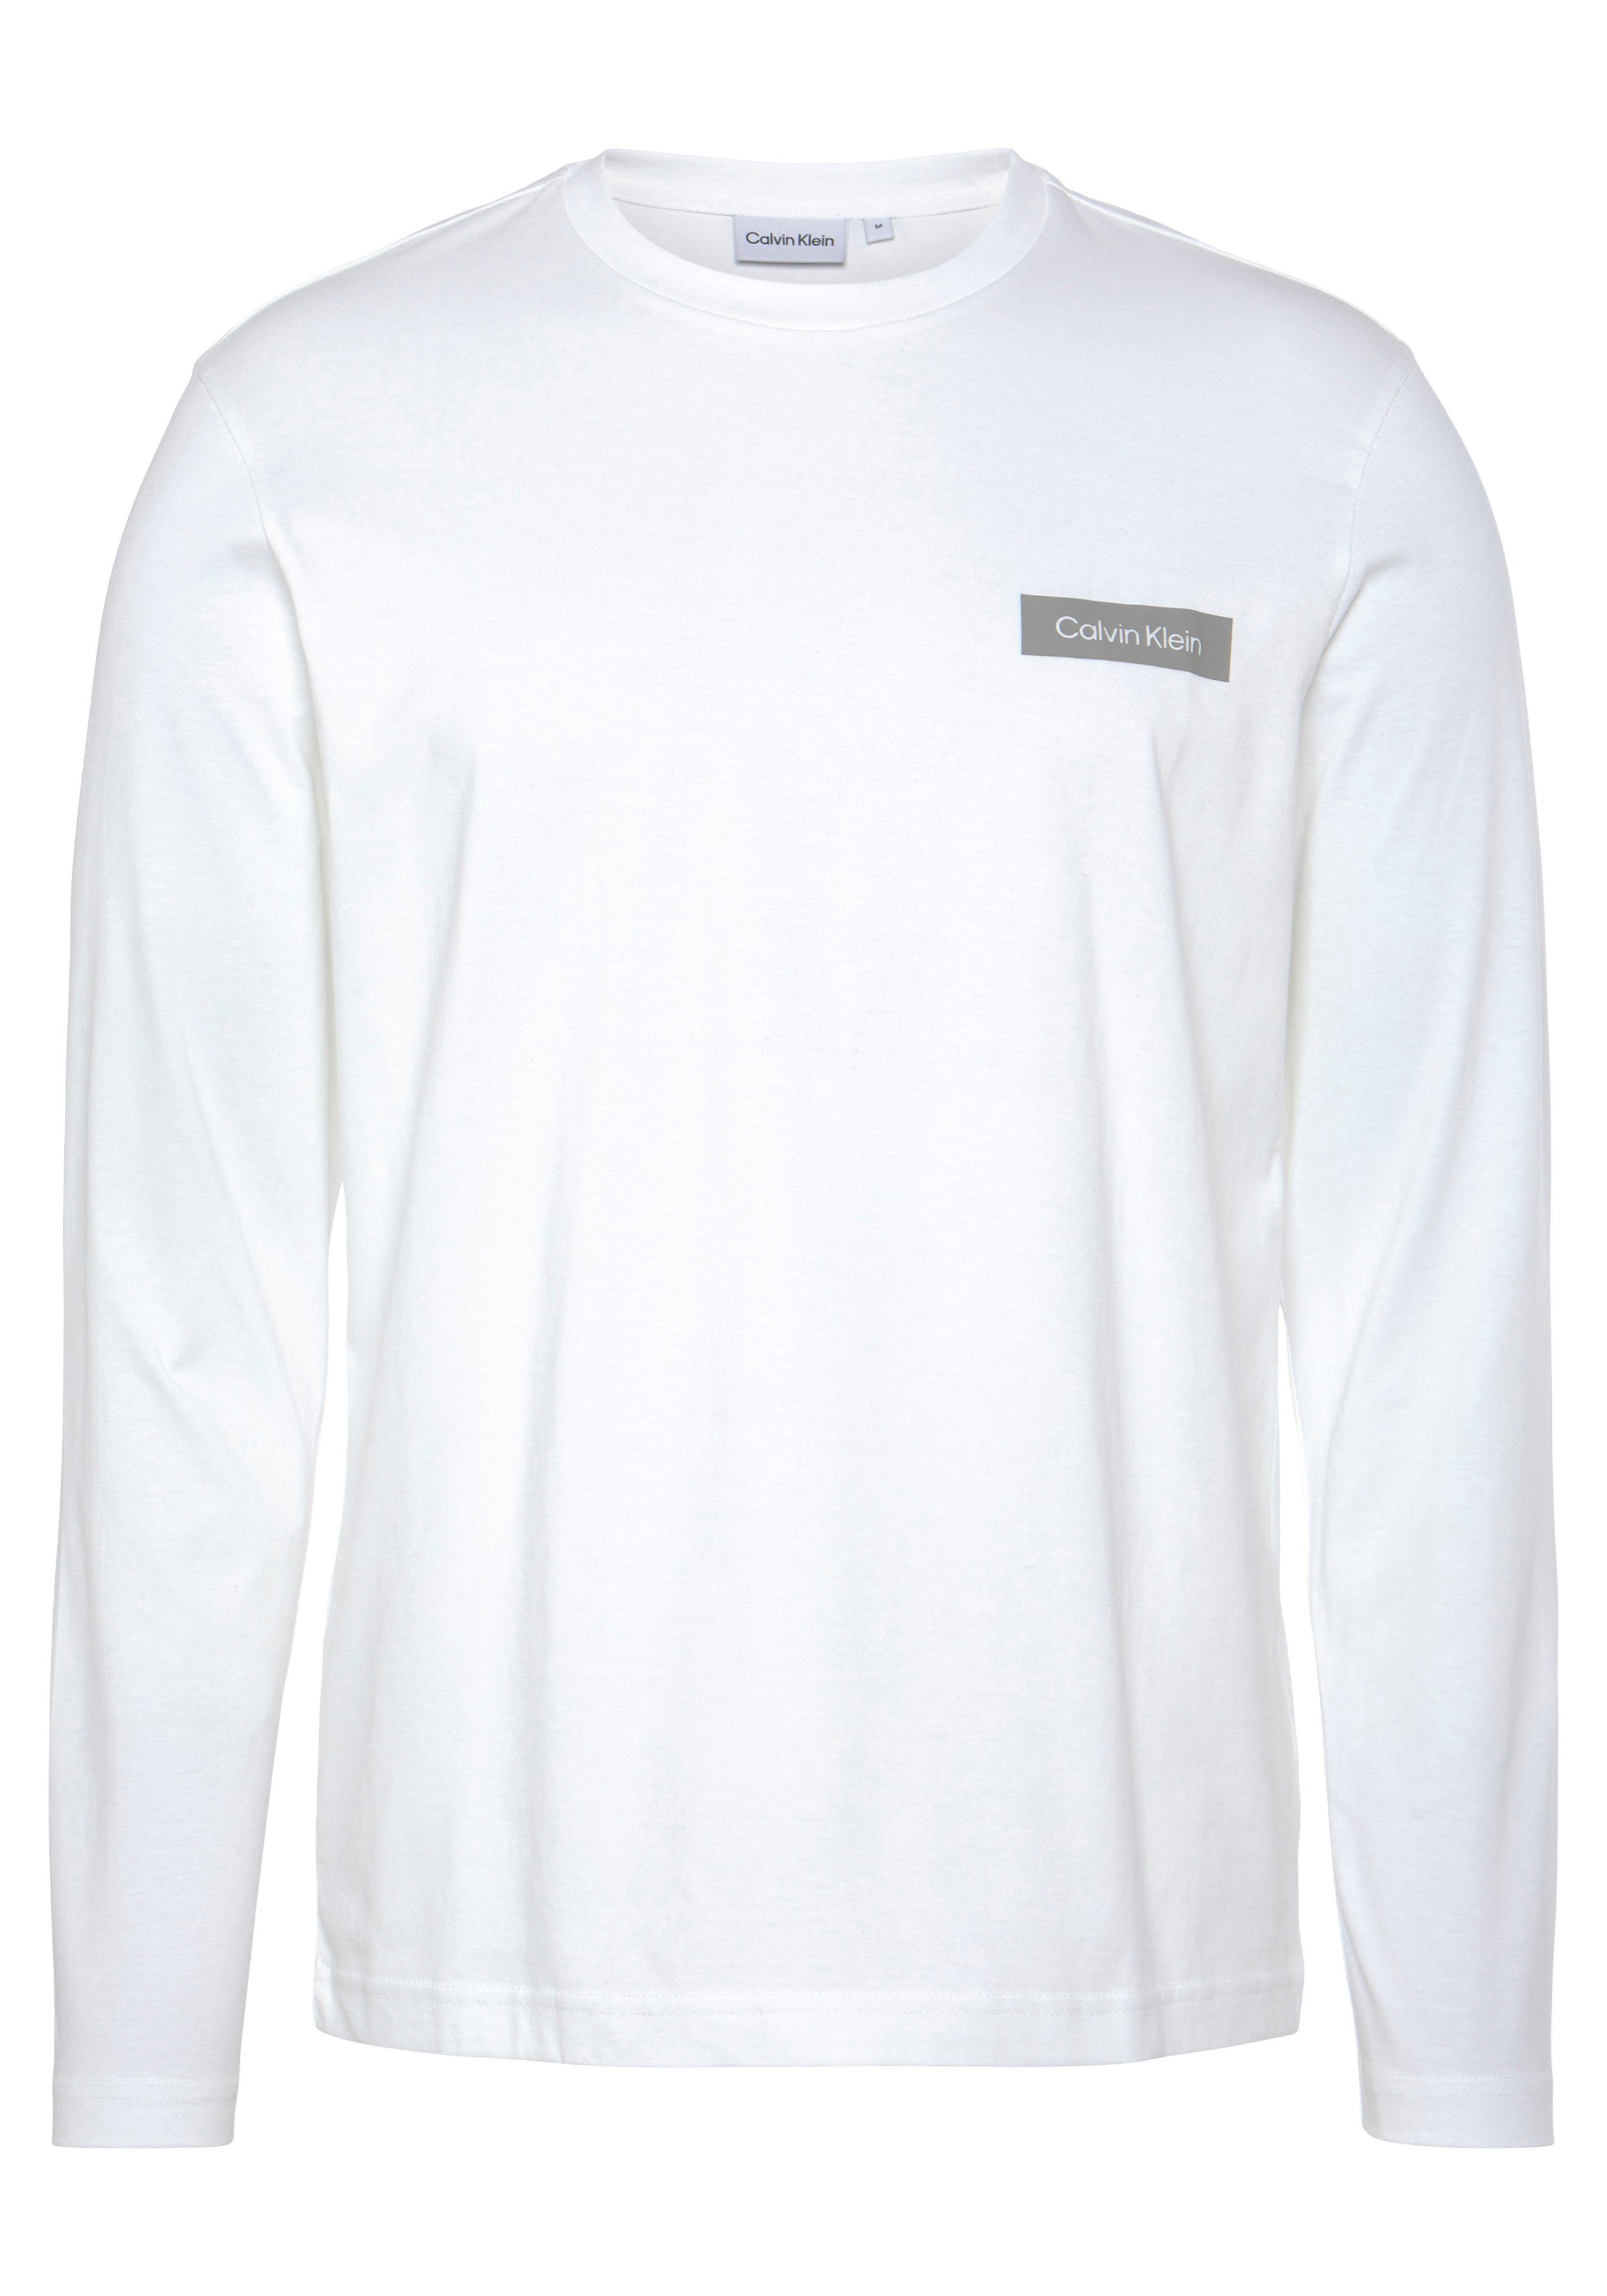 Calvin Klein LOGO CONTRAST Bright mit LS CK-Logodruck White T-SHIRT LINE Langarmshirt